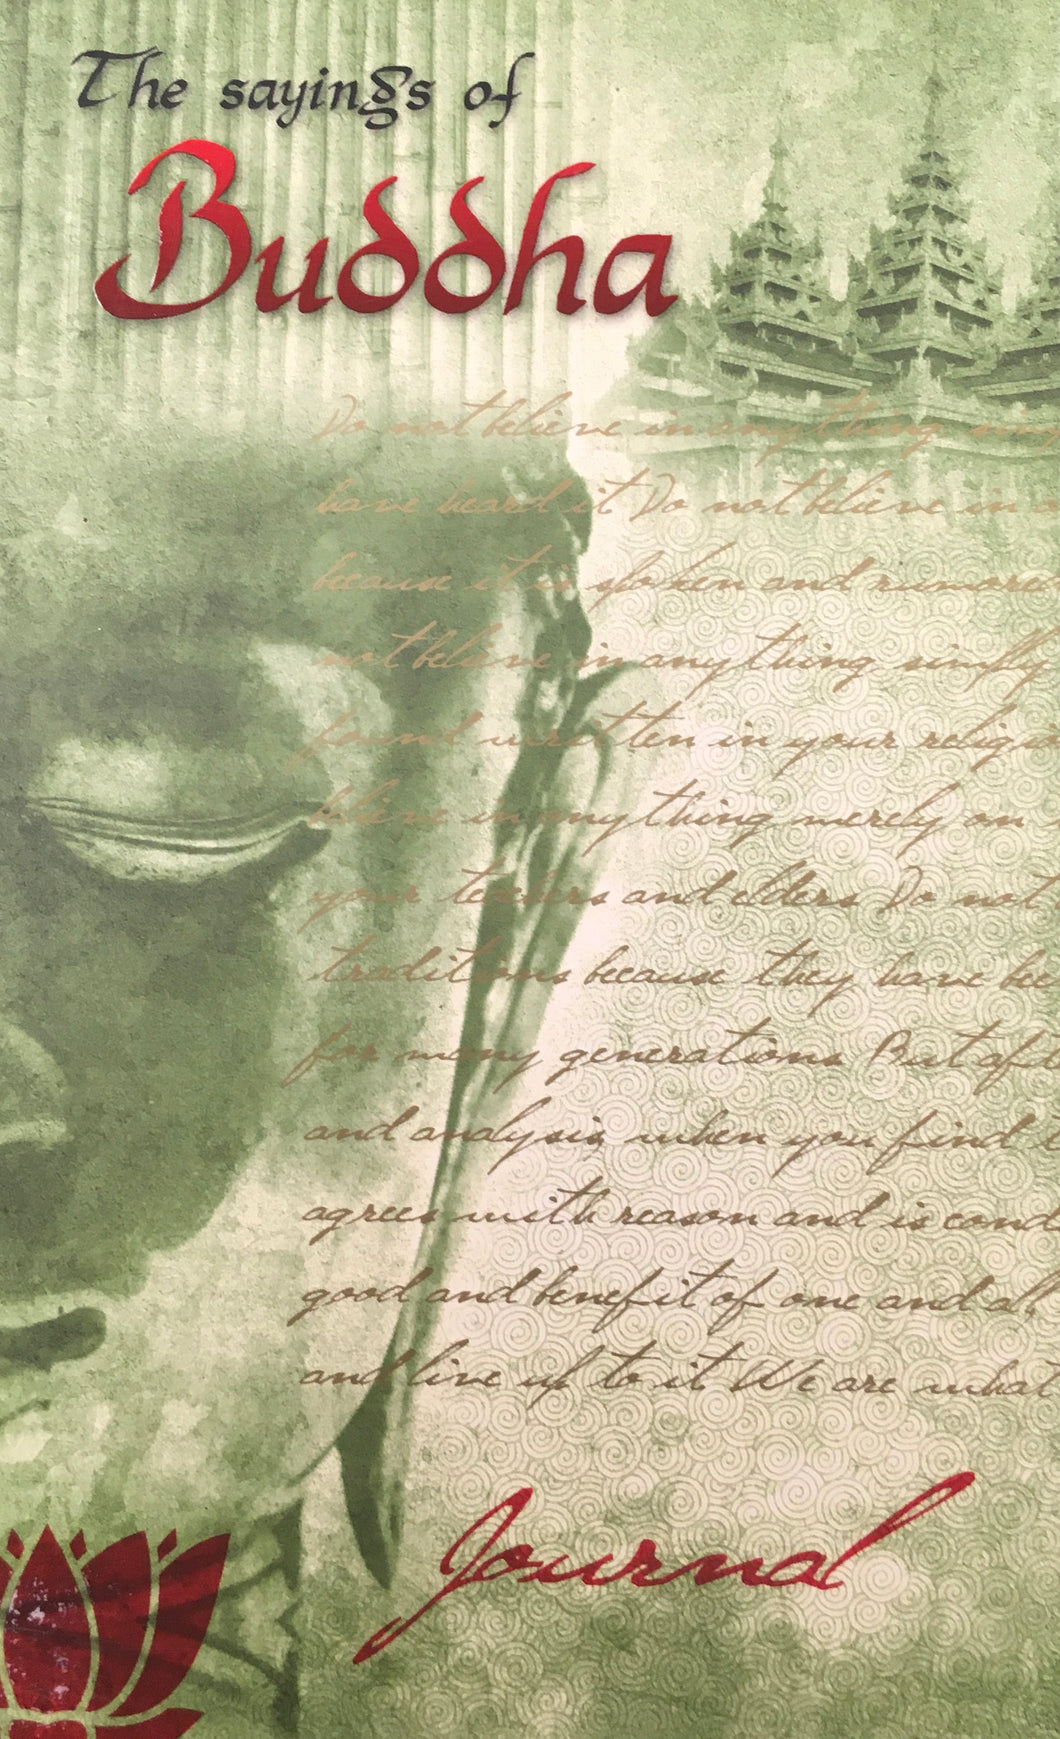 The Sayings of Buddha